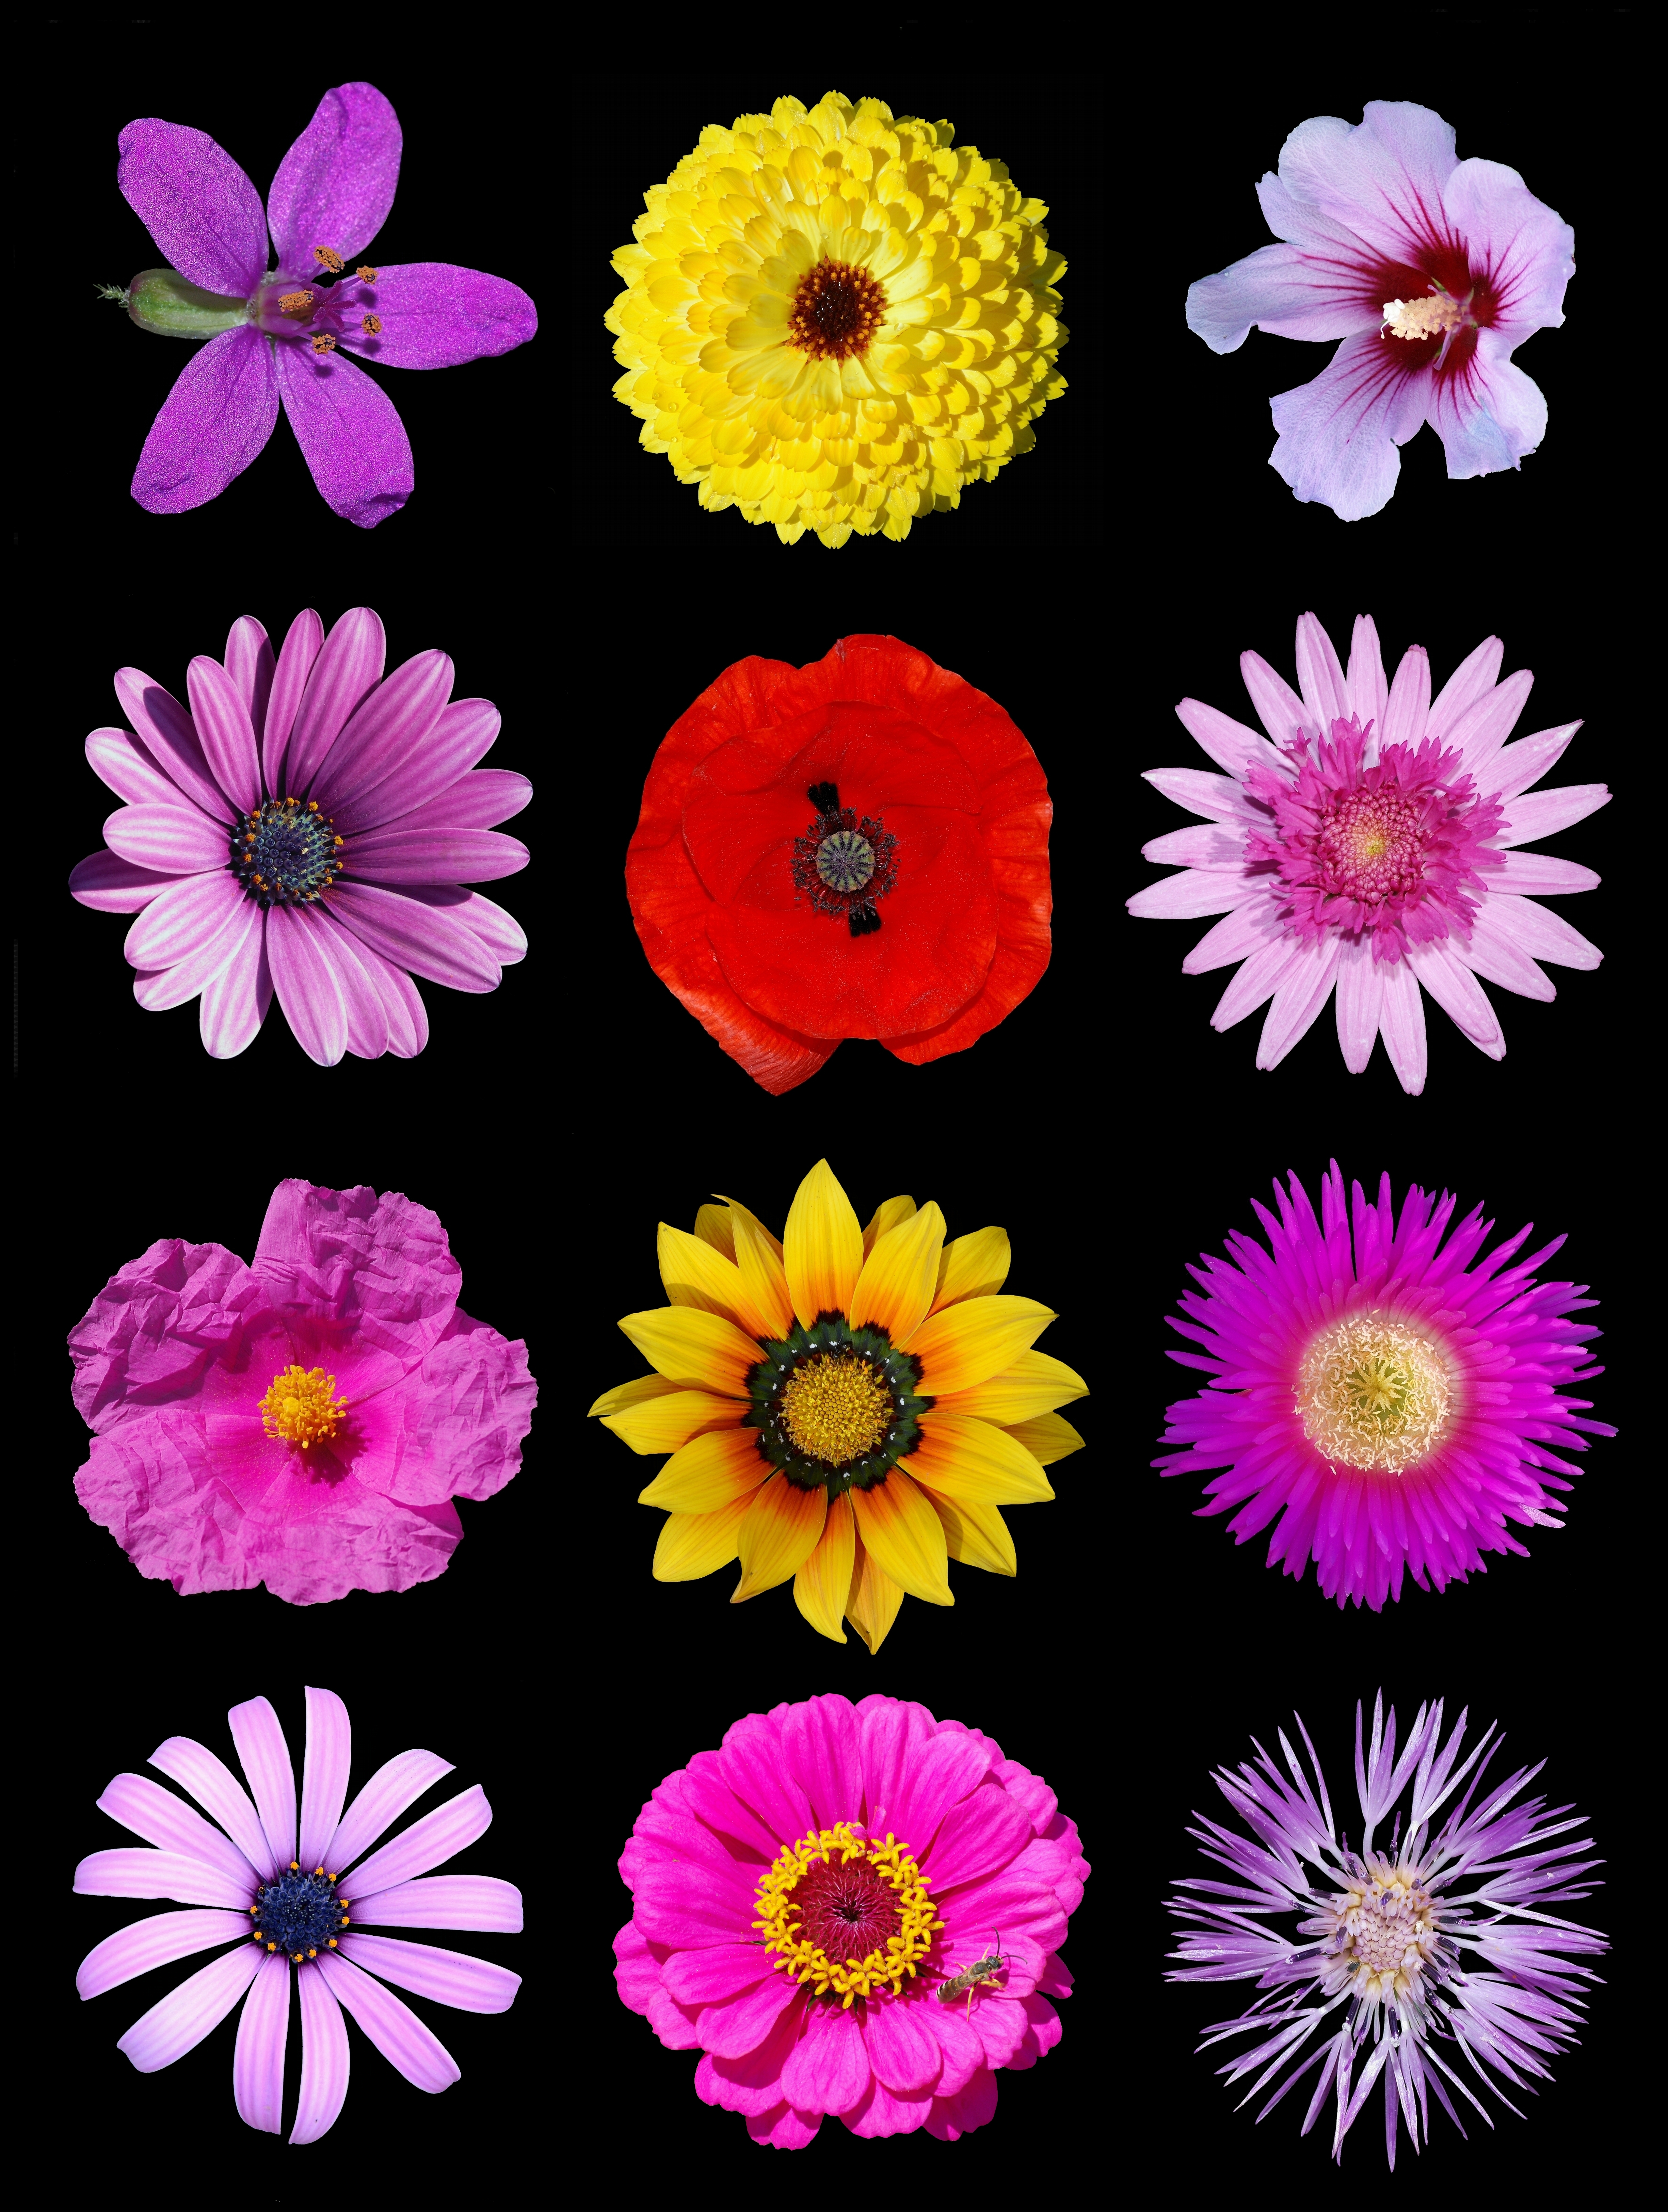 File:Colored flowers e.jpg - Wikimedia Commons